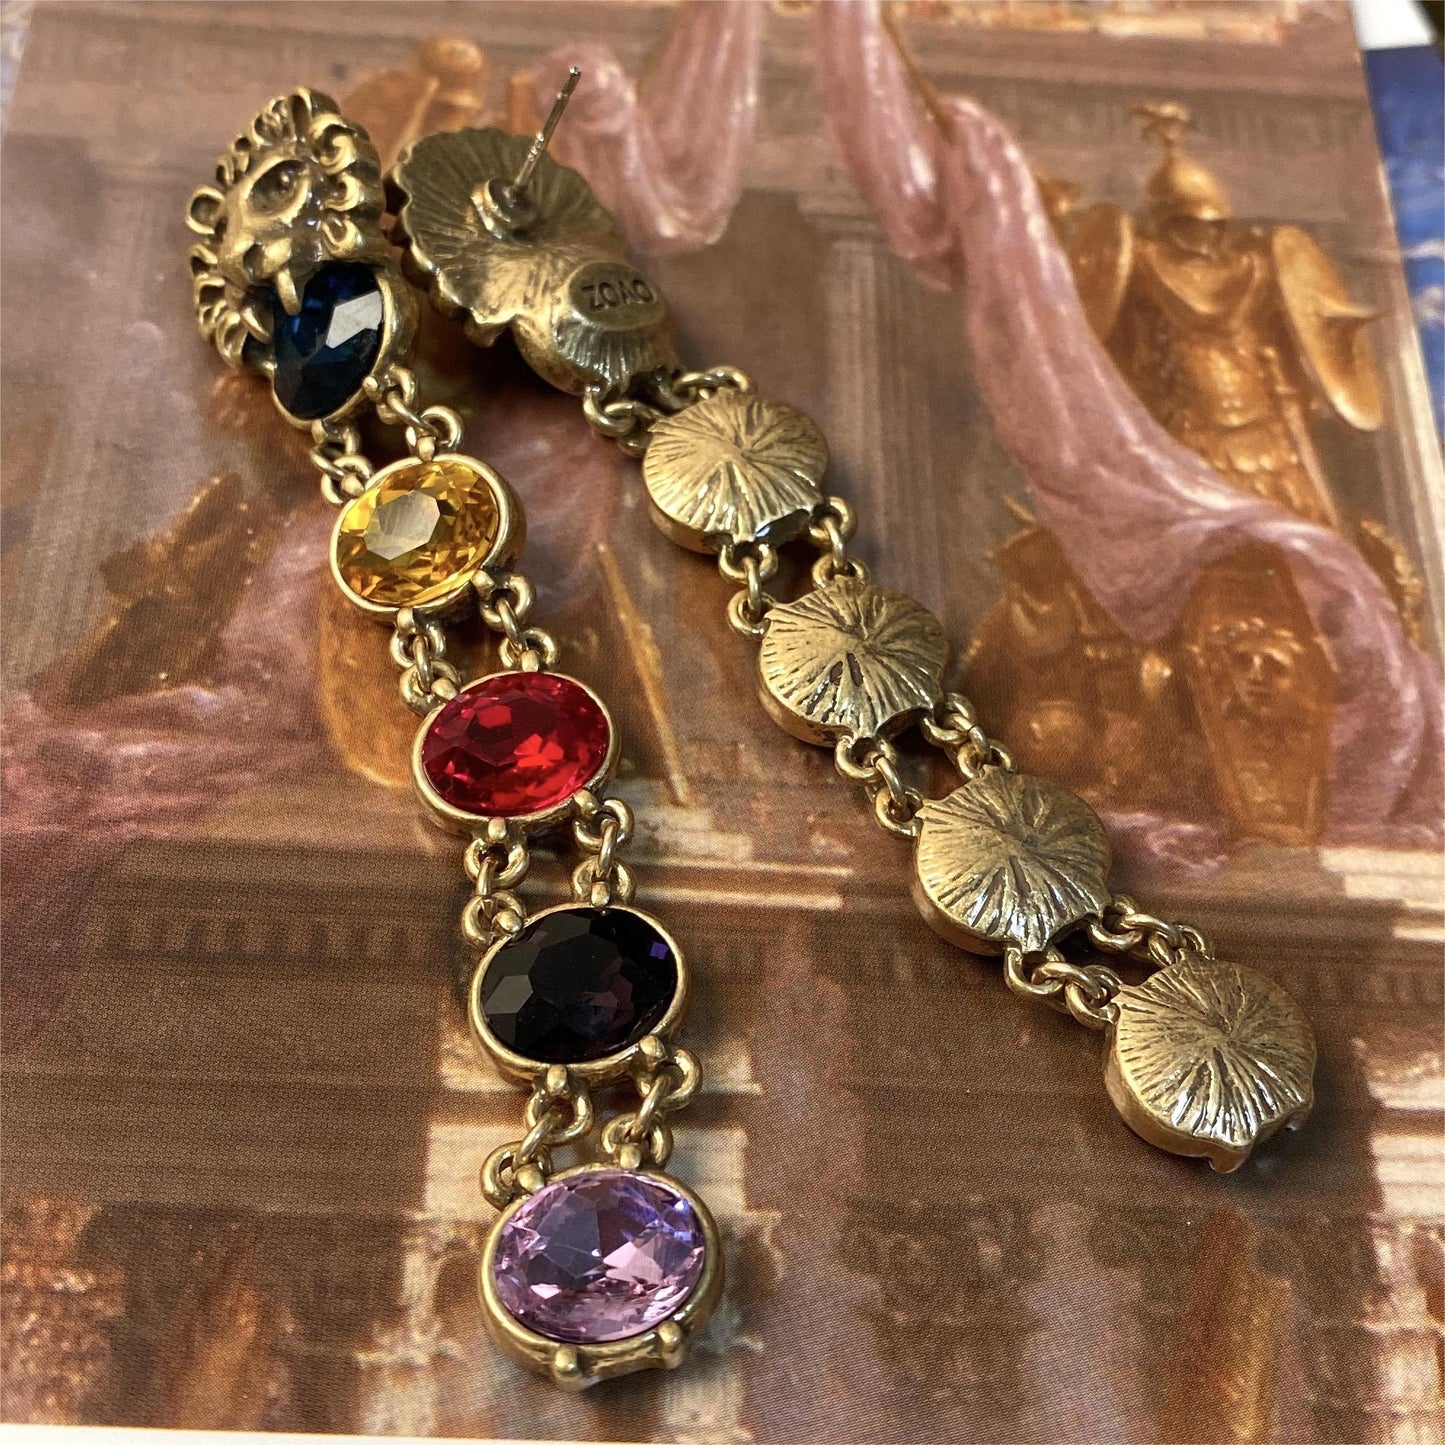 Colorful rhinestone vintage lion earrings